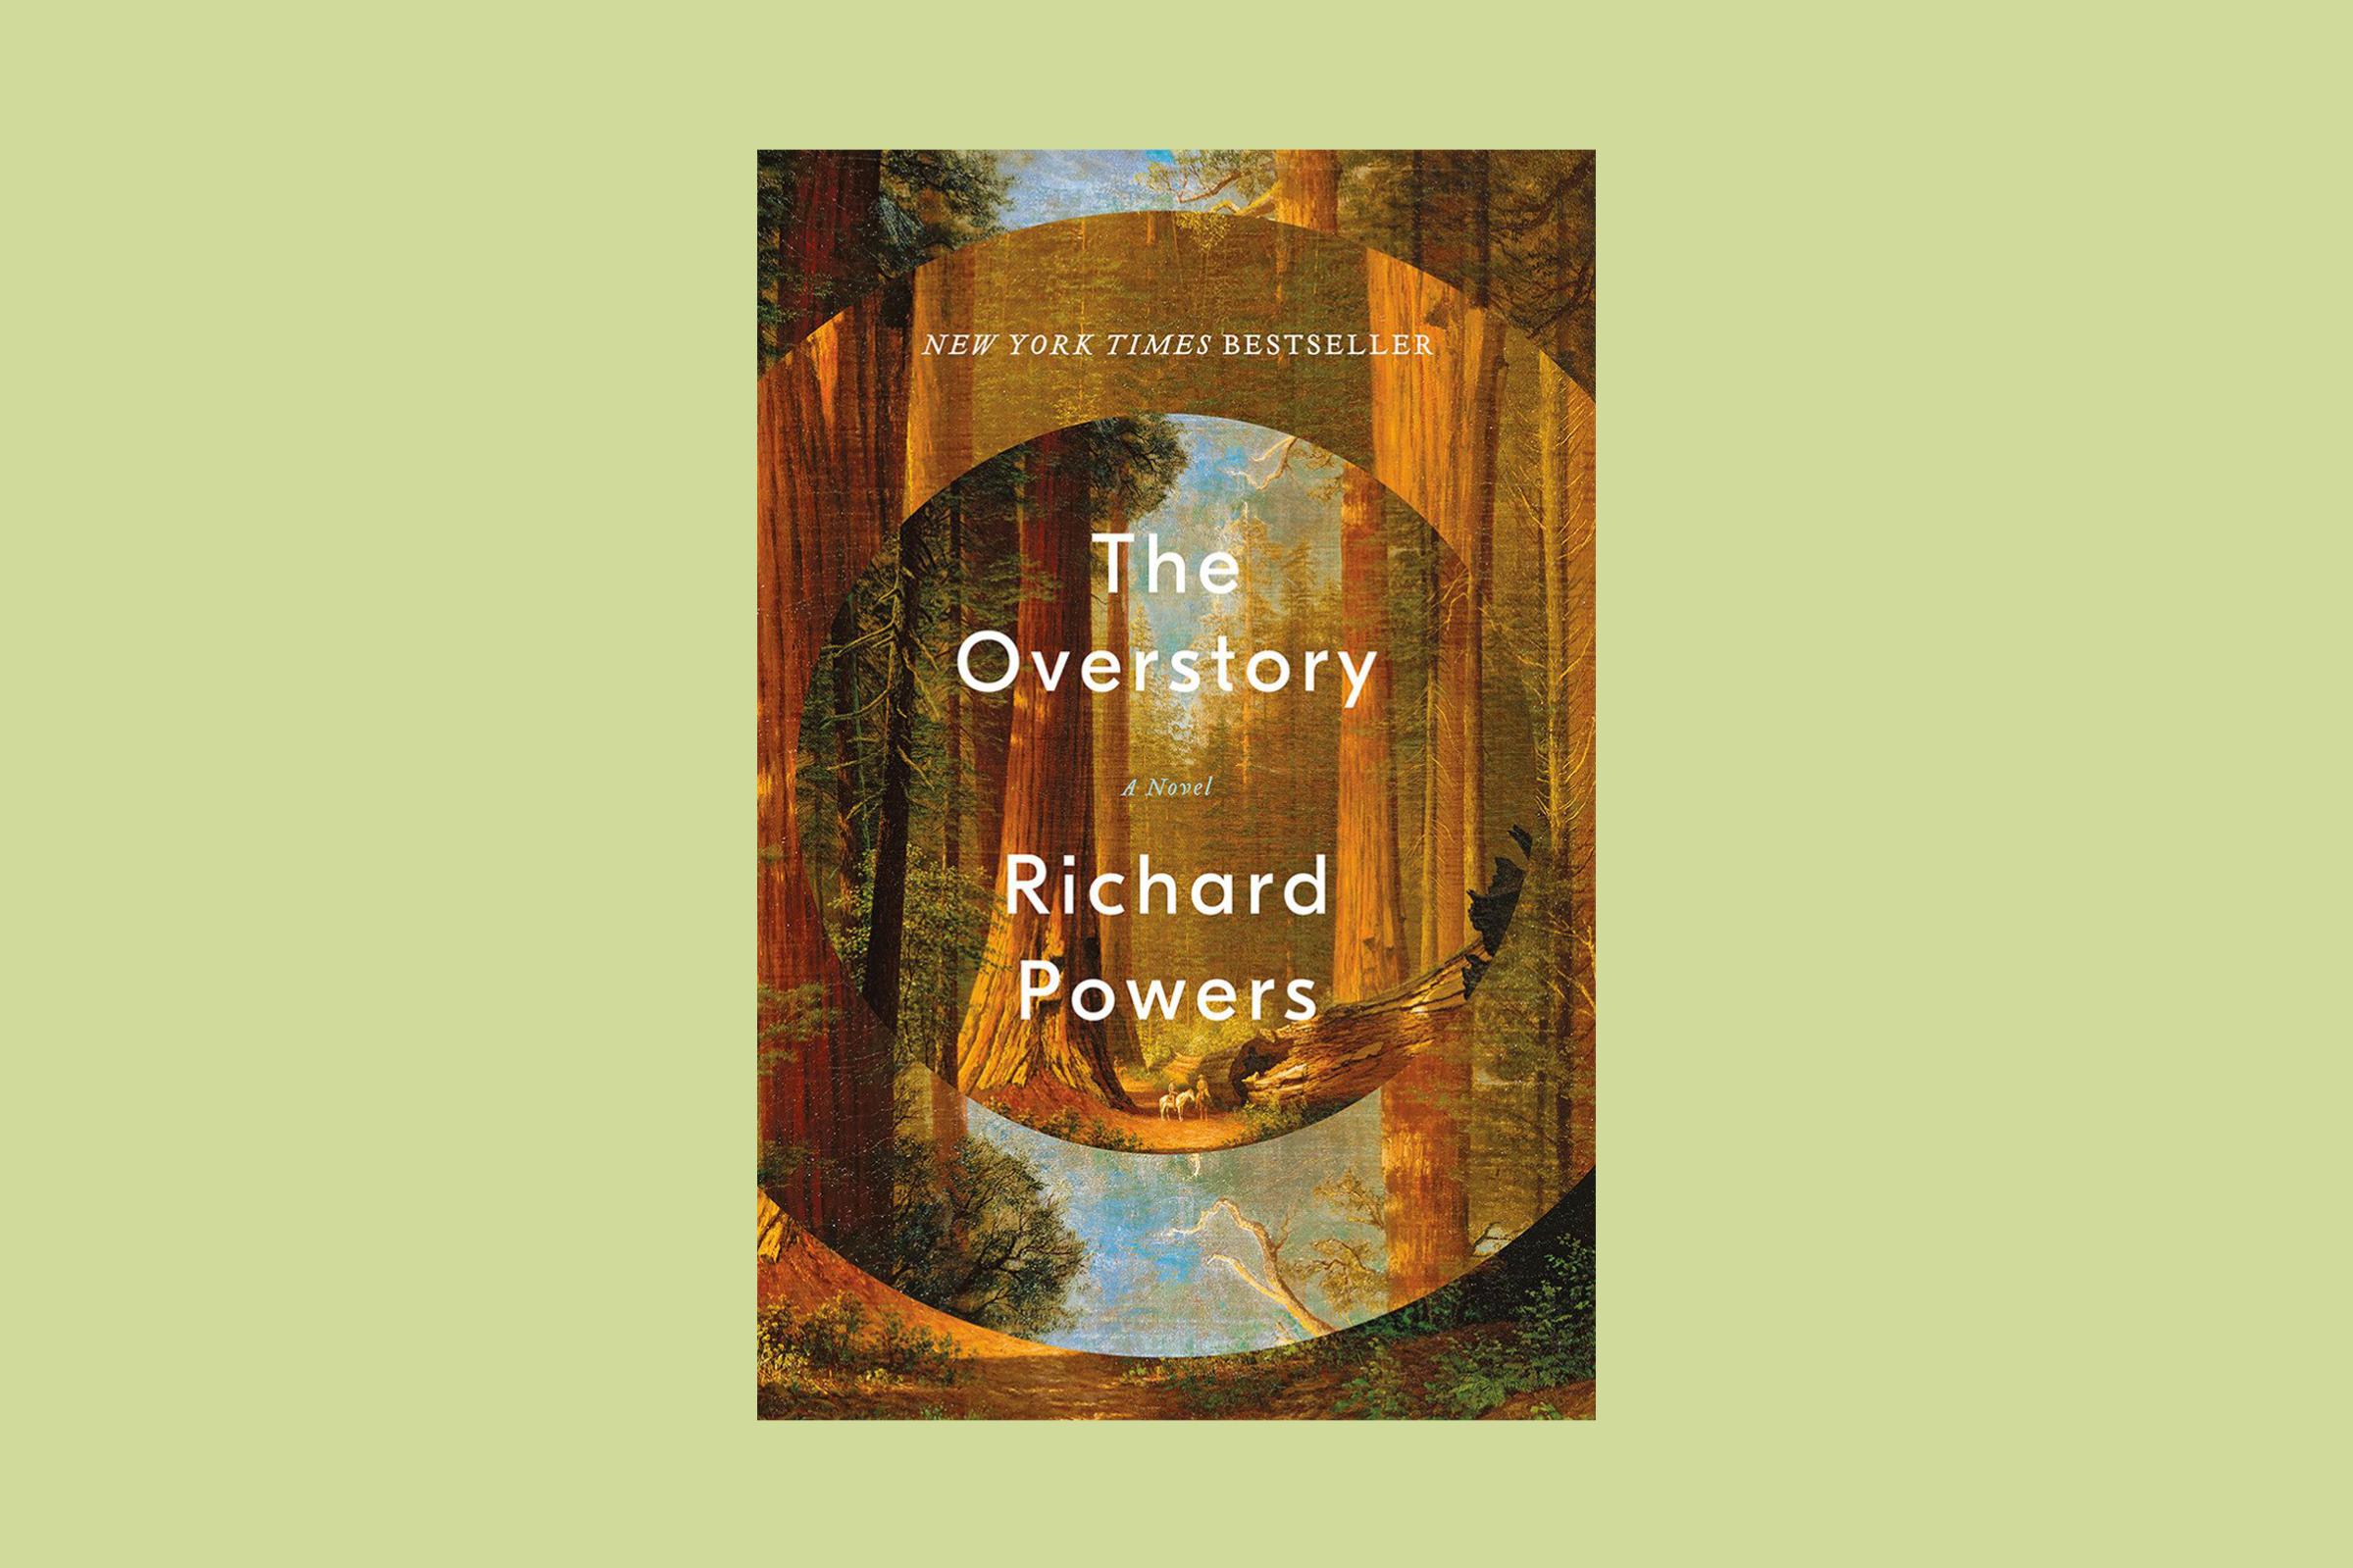 The Overstory, Richard Powers, Norton